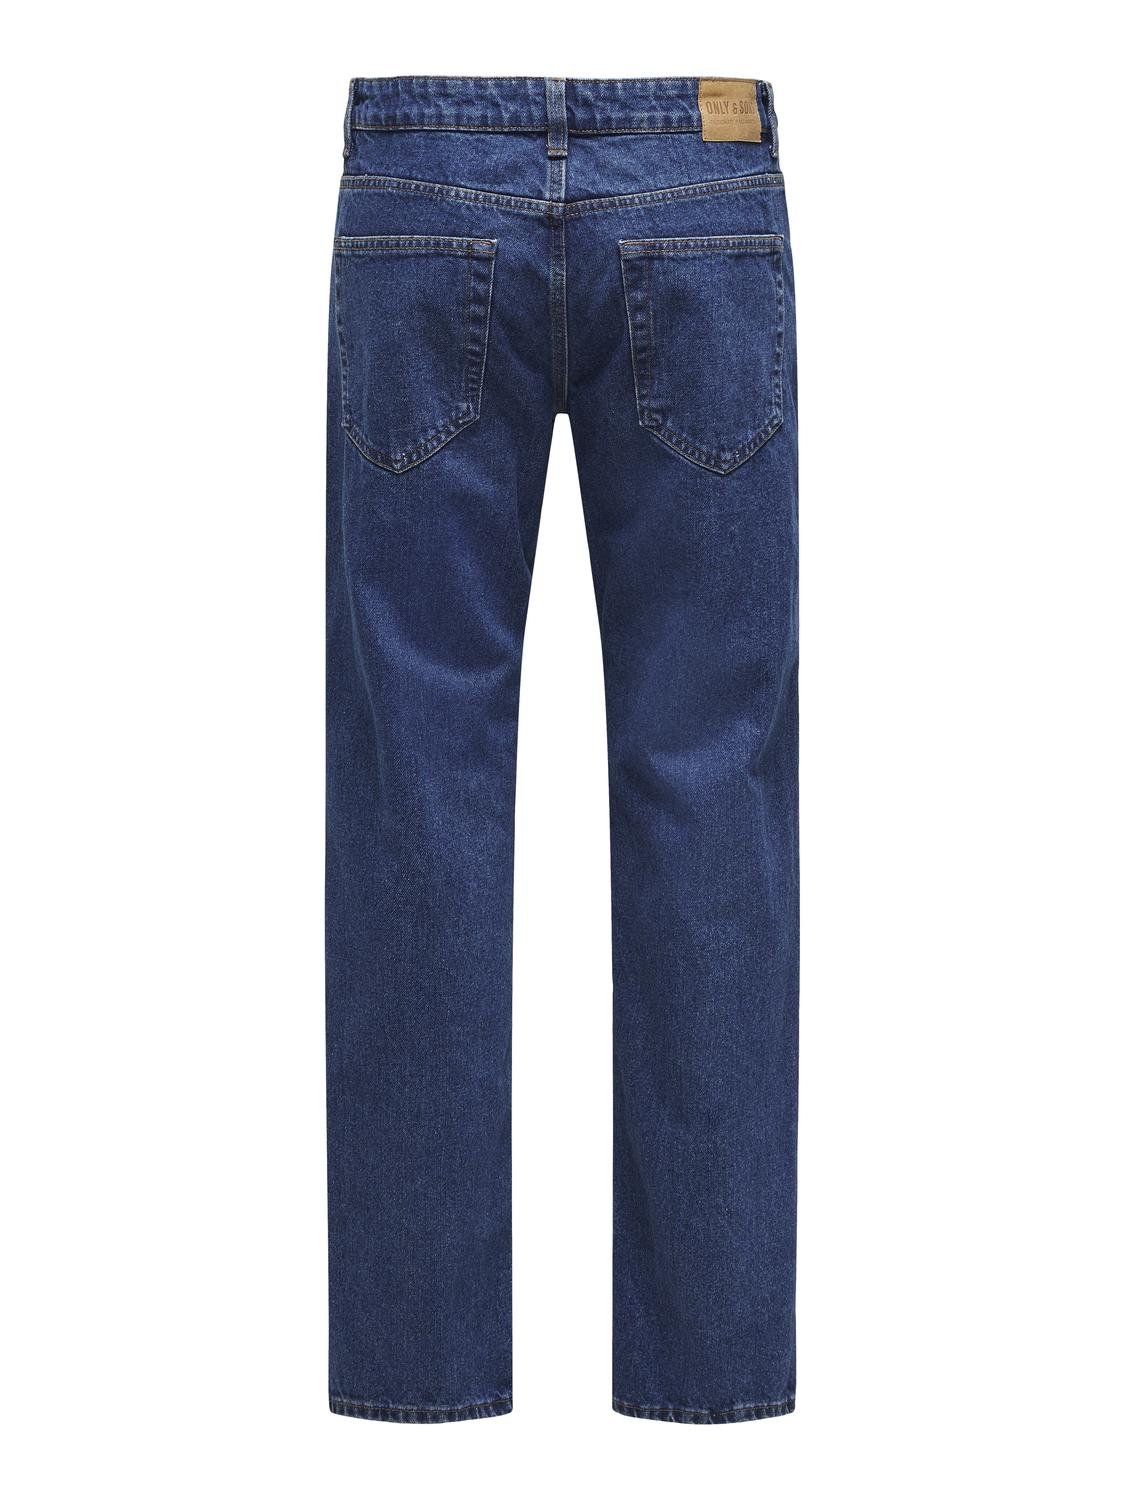 ONLY & SONS ONSEdge Straight Jeans -Medium Blue Denim - 22027901